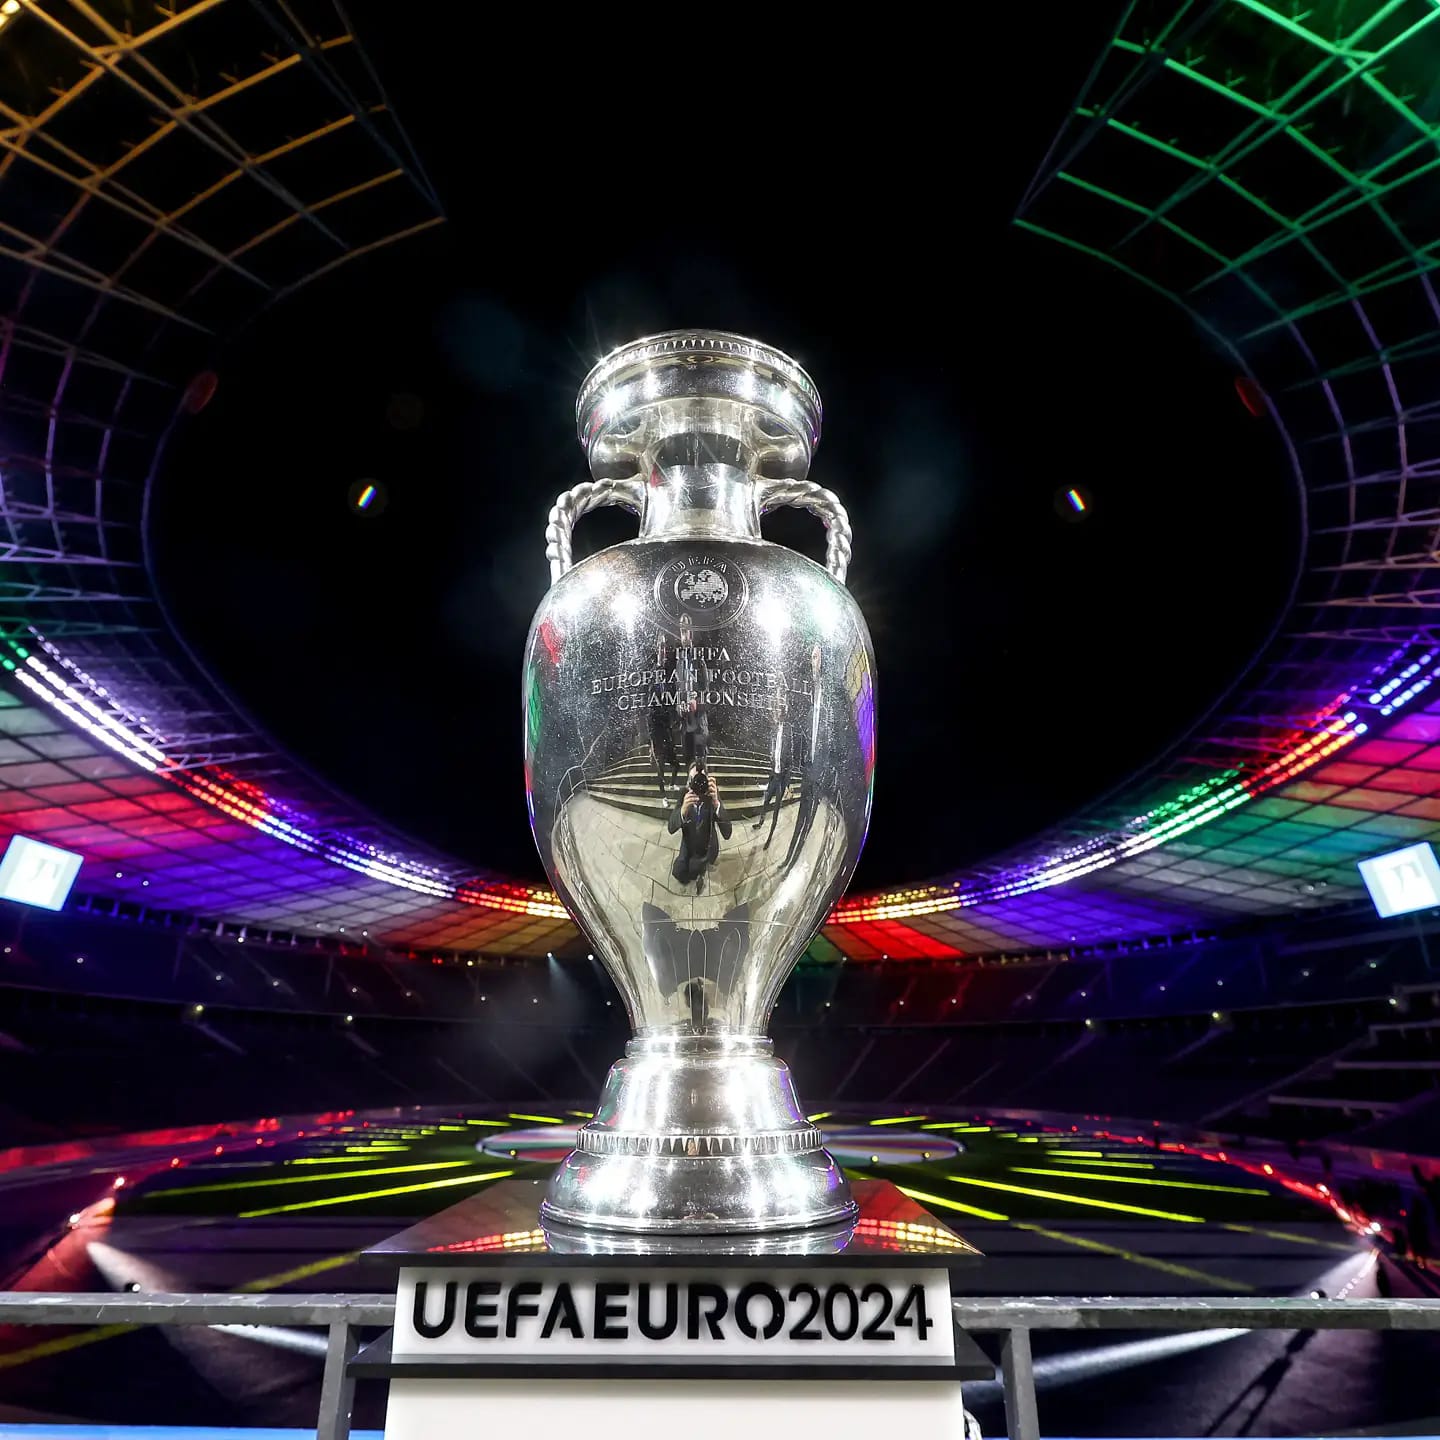 Uefa Euro 2024 World Cup